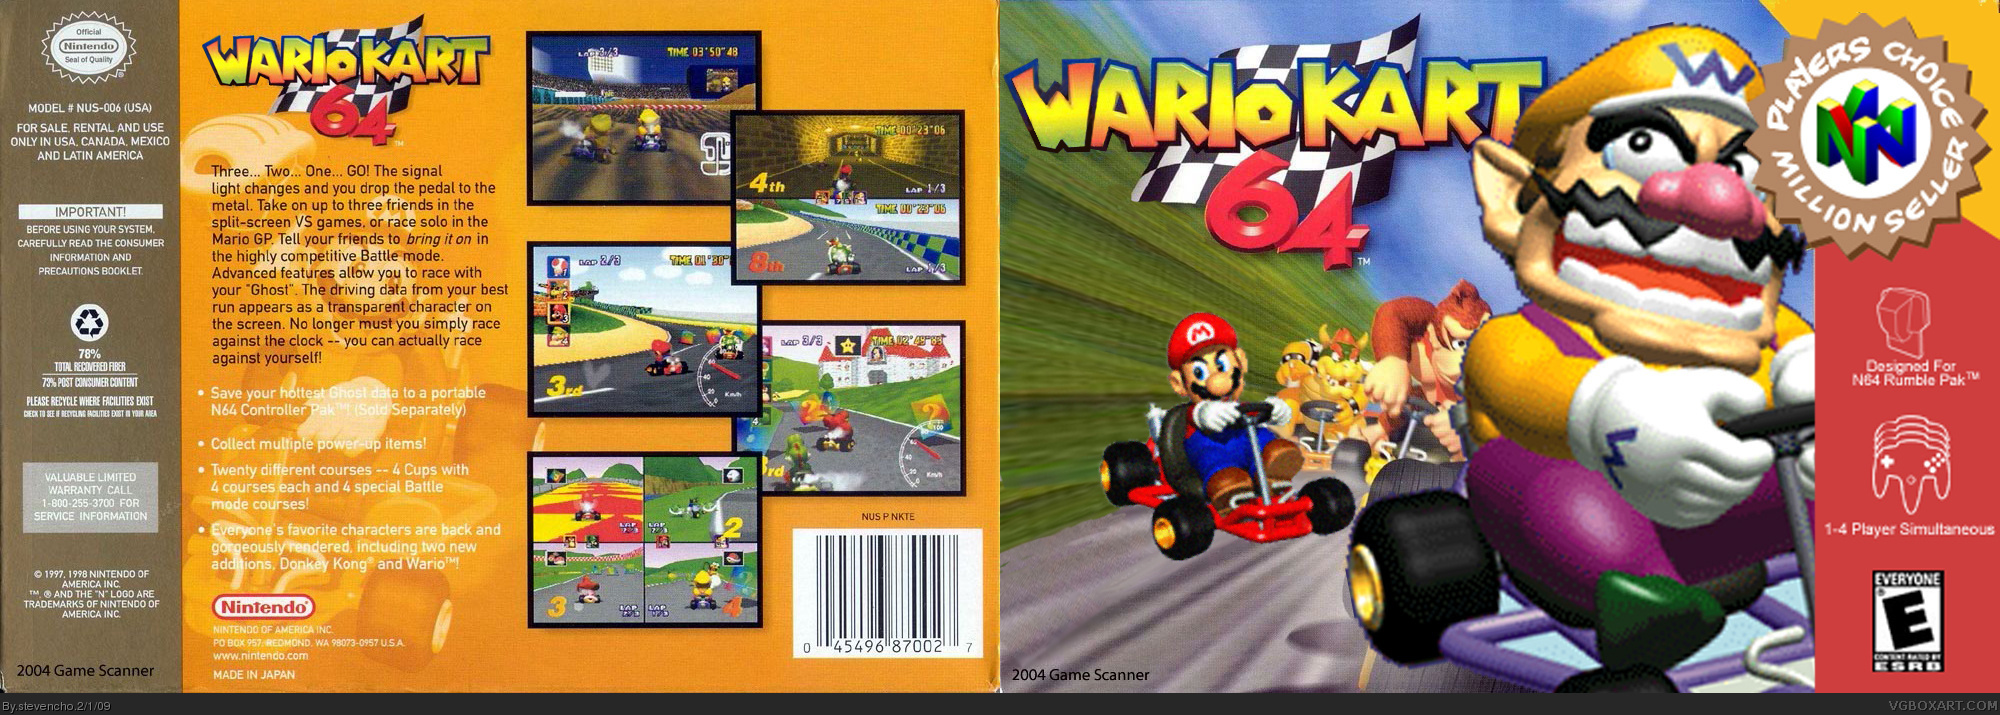 Wario Kart 64 box cover